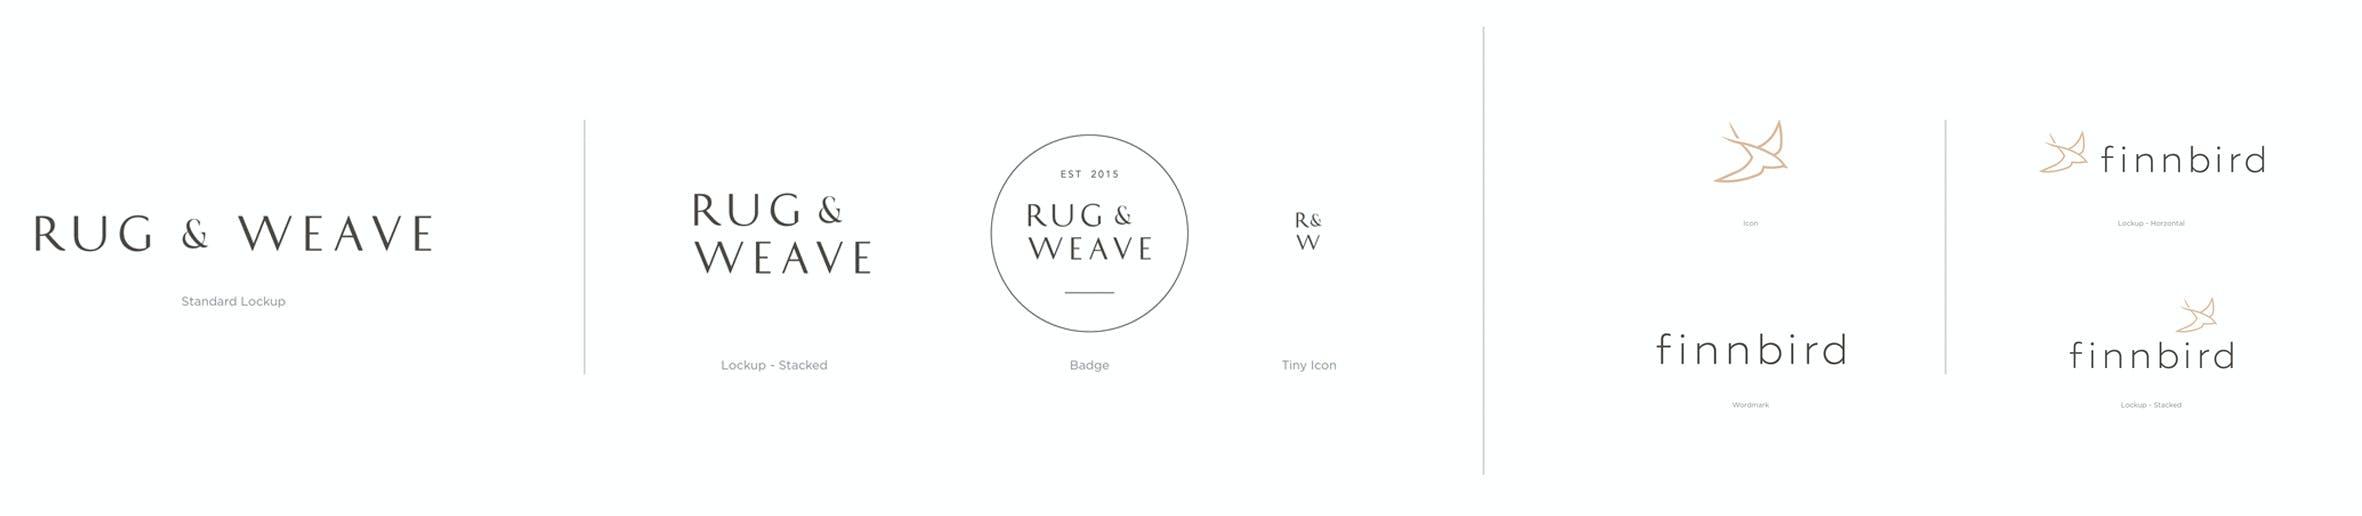 Rug and Weave Logo Band
